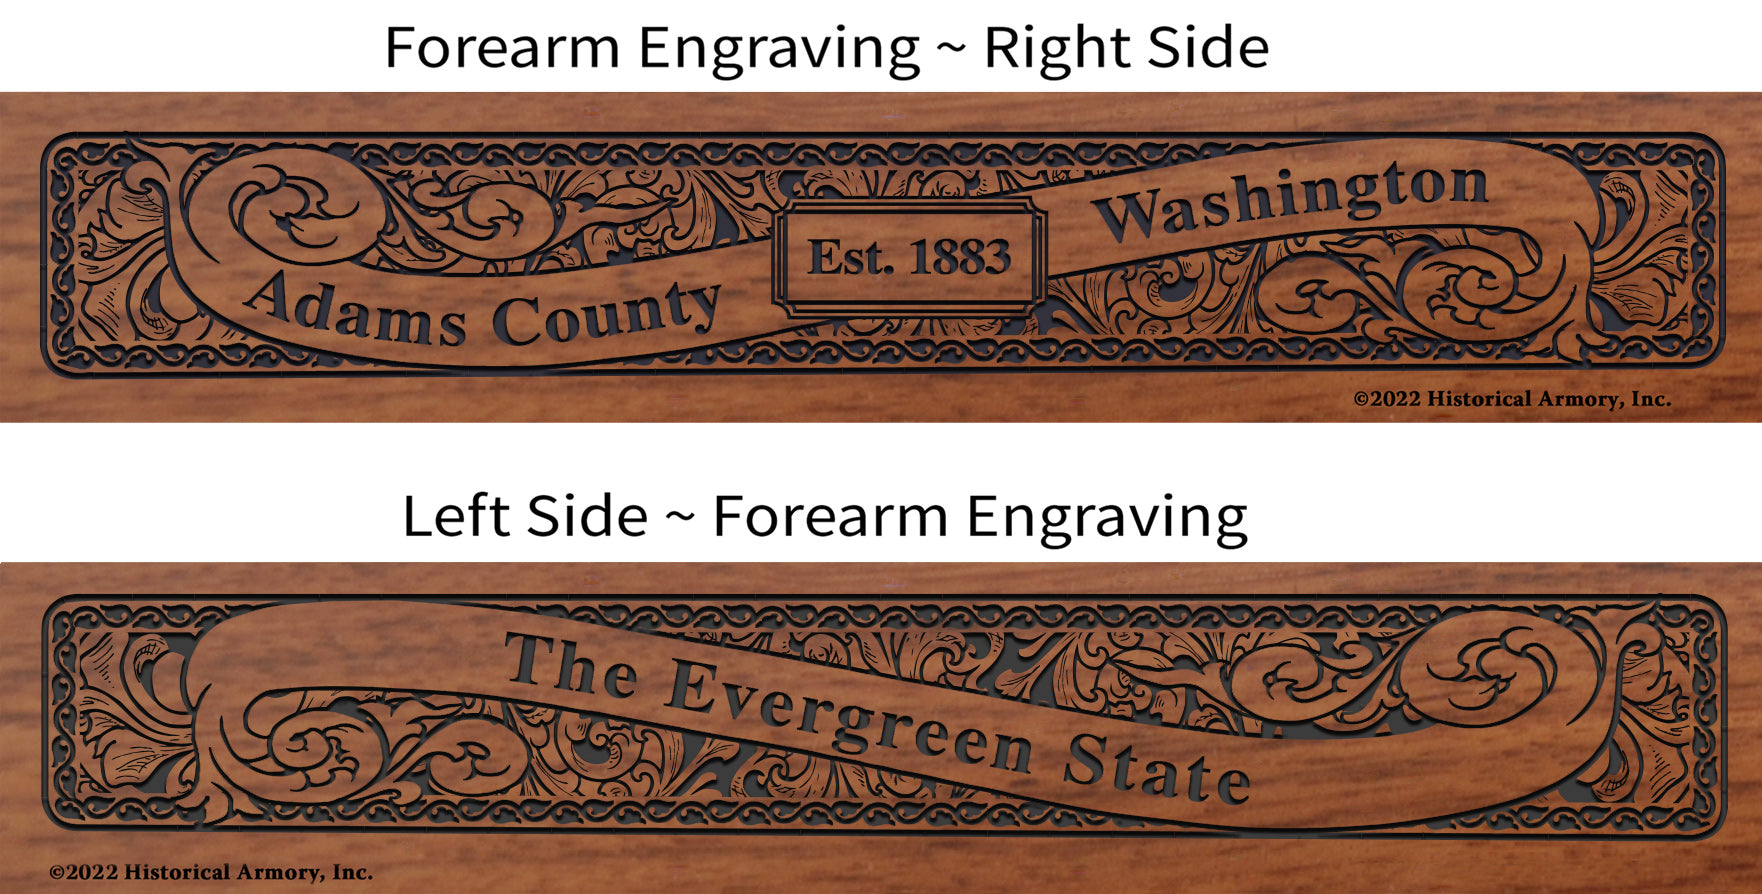 Adams County Washington Engraved Rifle Forearm